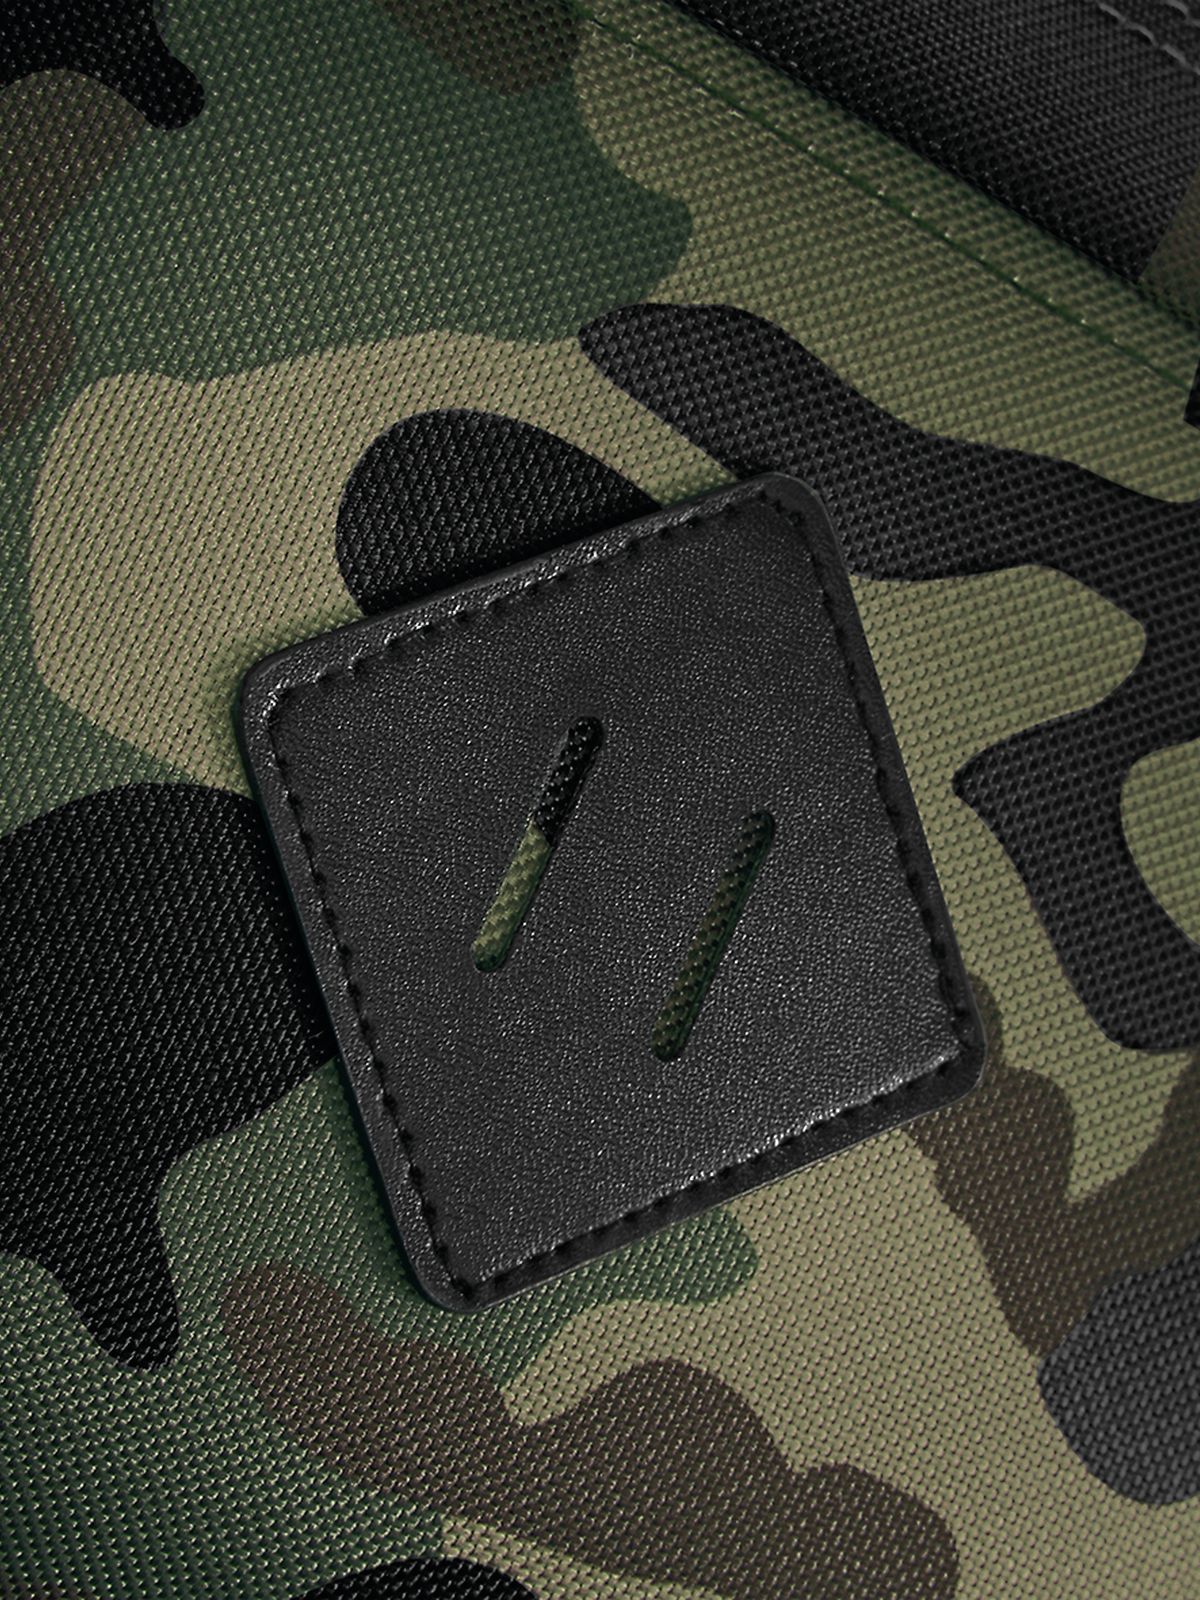 camo-backpack-jungle-camouflage.webp